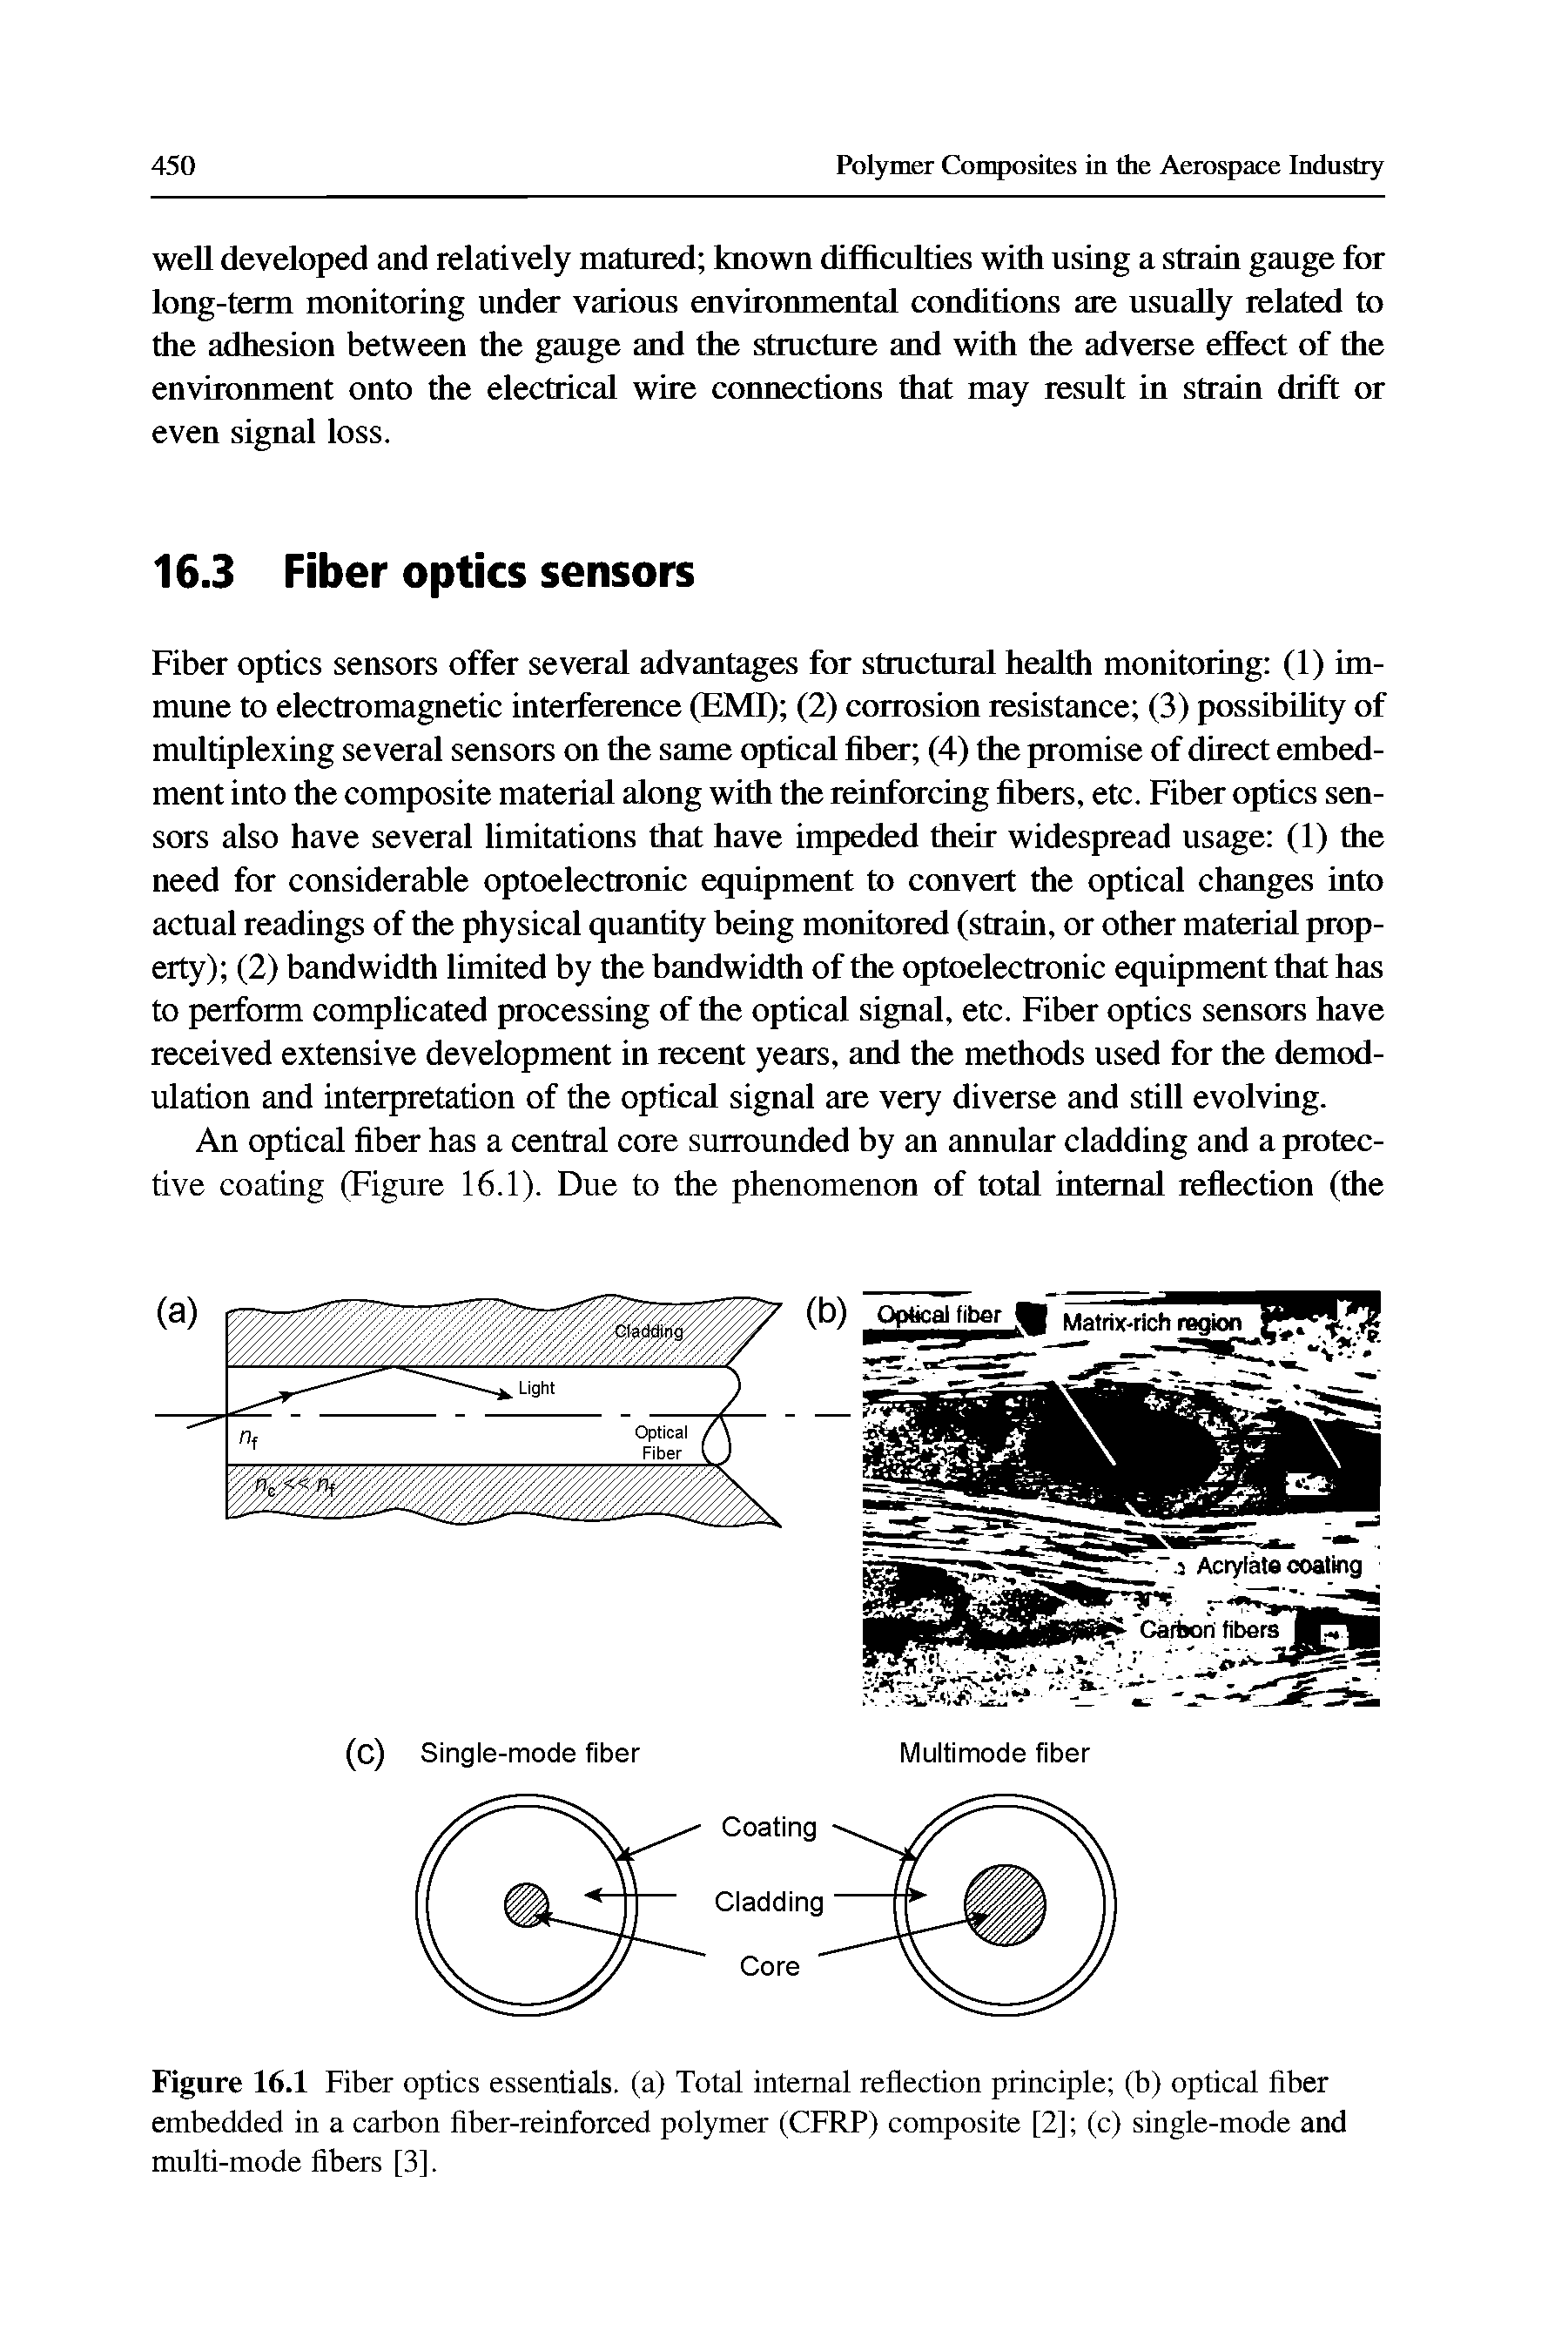 Figure 16.1 Fiber optics essentials, (a) Total internal reflection principle (b) optical fiber embedded in a carbon fiber-reinforced polymer (CFRP) composite [2] (c) single-mode and multi-mode fibers [3].